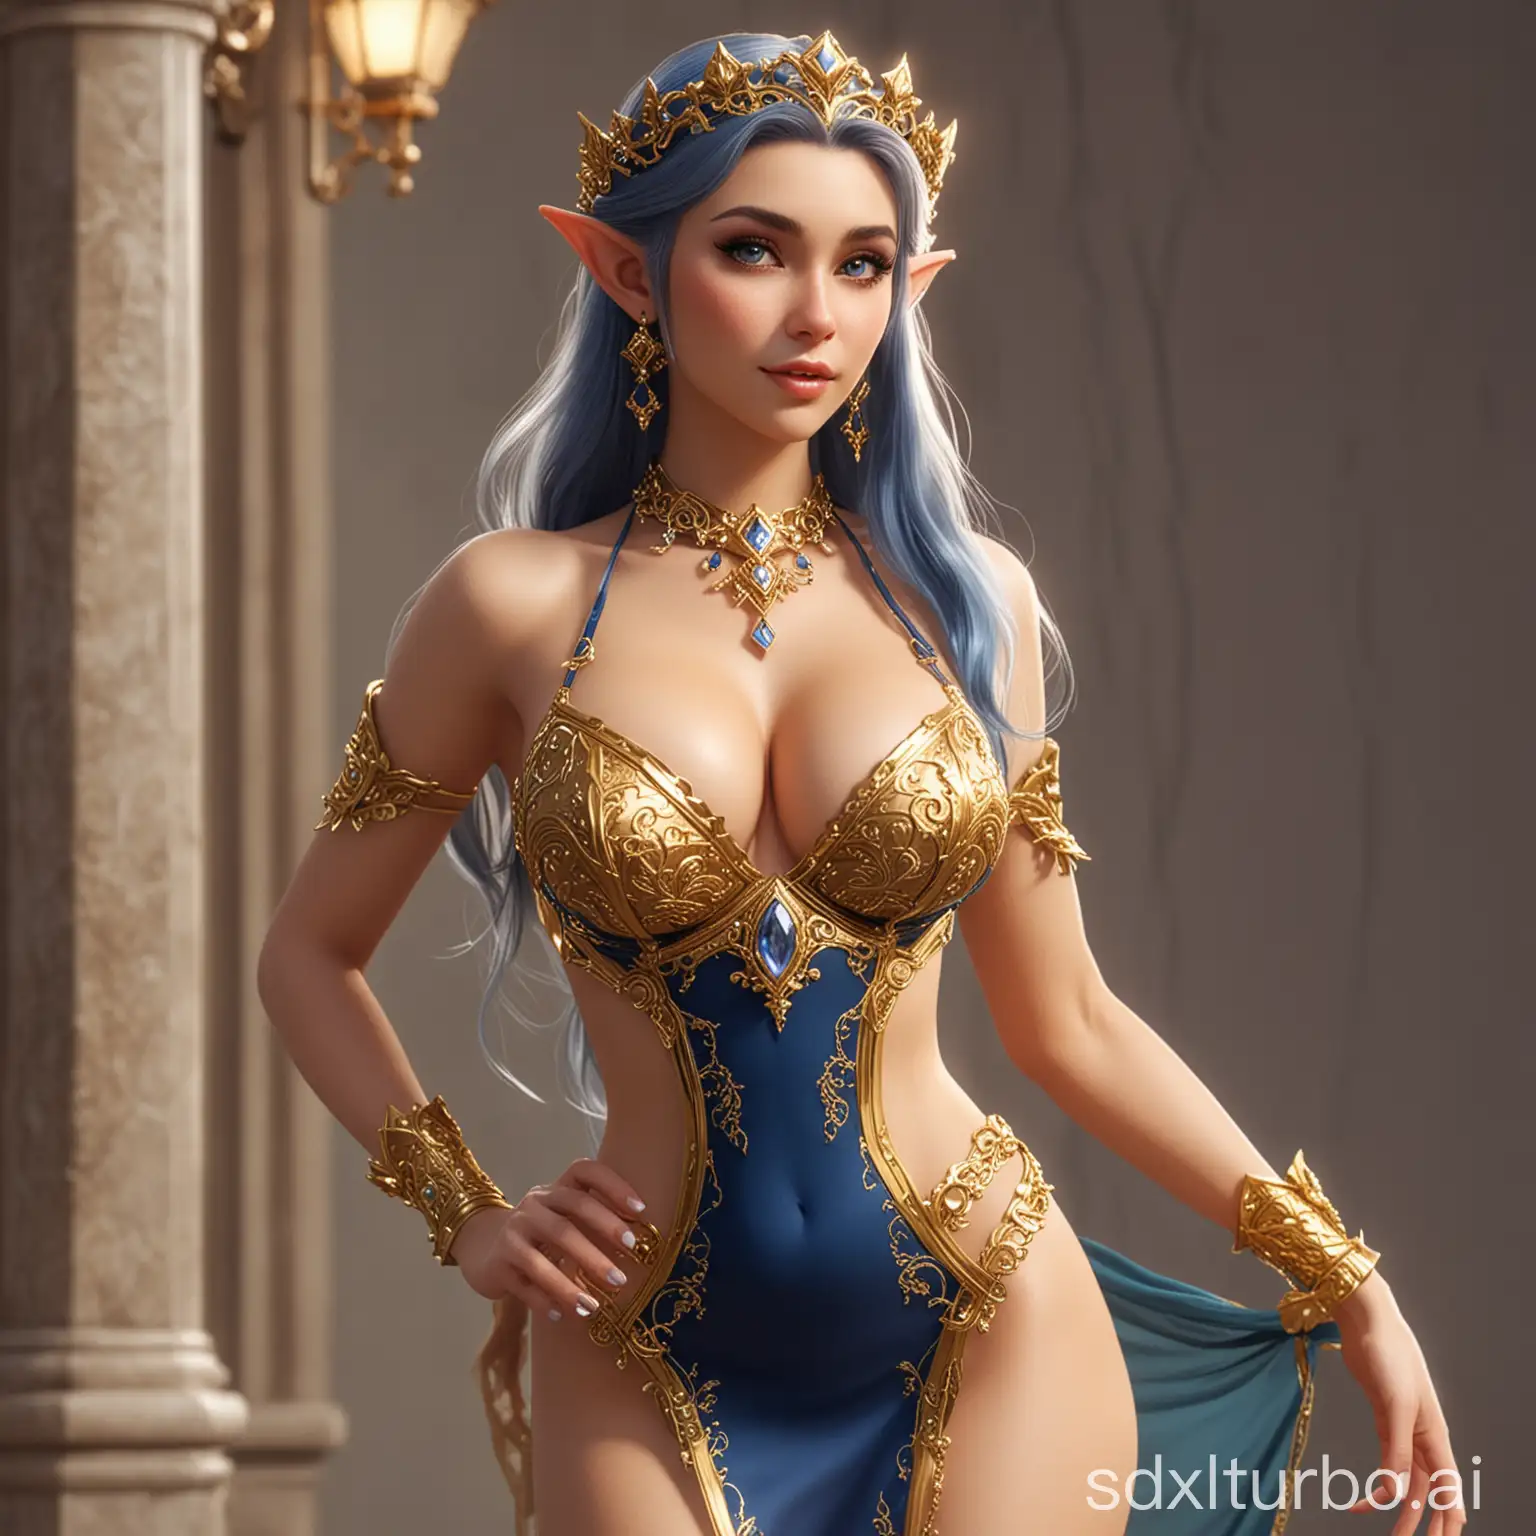 an busty elf princess wearing a gold jerellery lingerie sapphire voxel dress